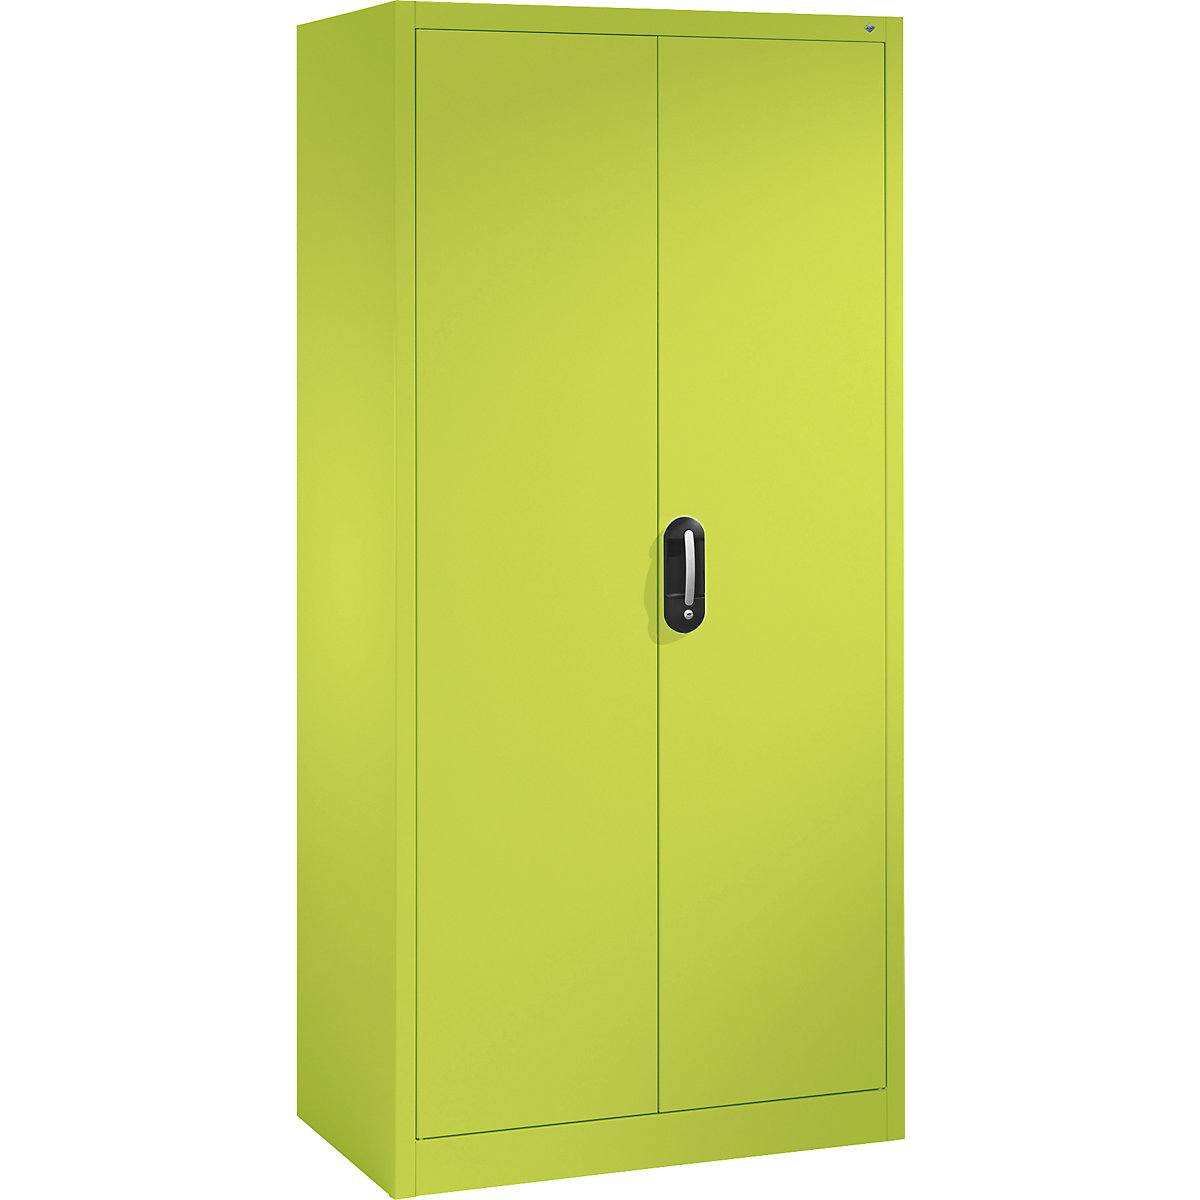 ACURADO universal cupboard – C+P, WxD 930 x 500 mm, viridian green / viridian green-15